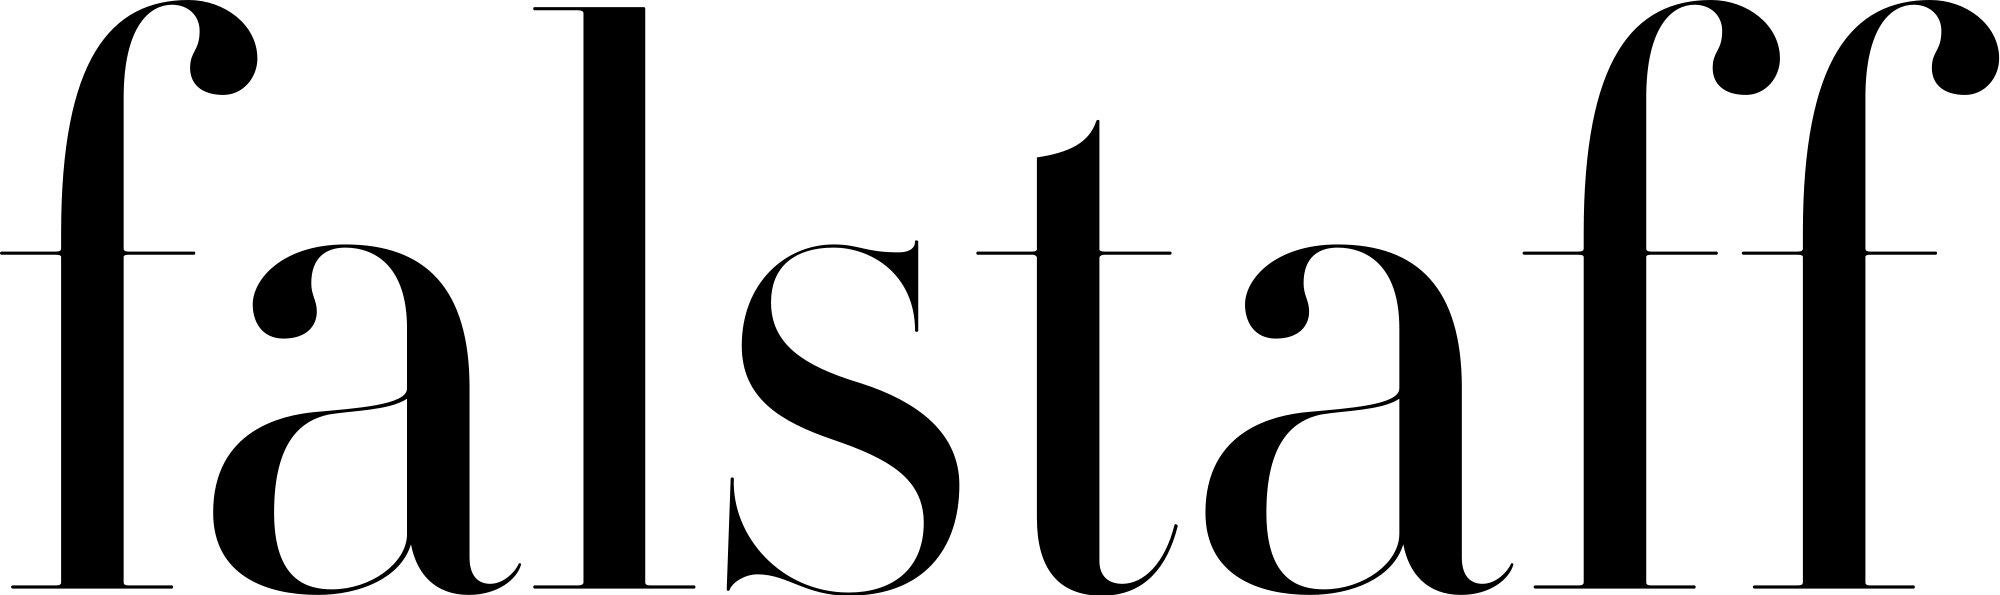 2000px-Falstaff_(Weinjournal)_Logo.svg